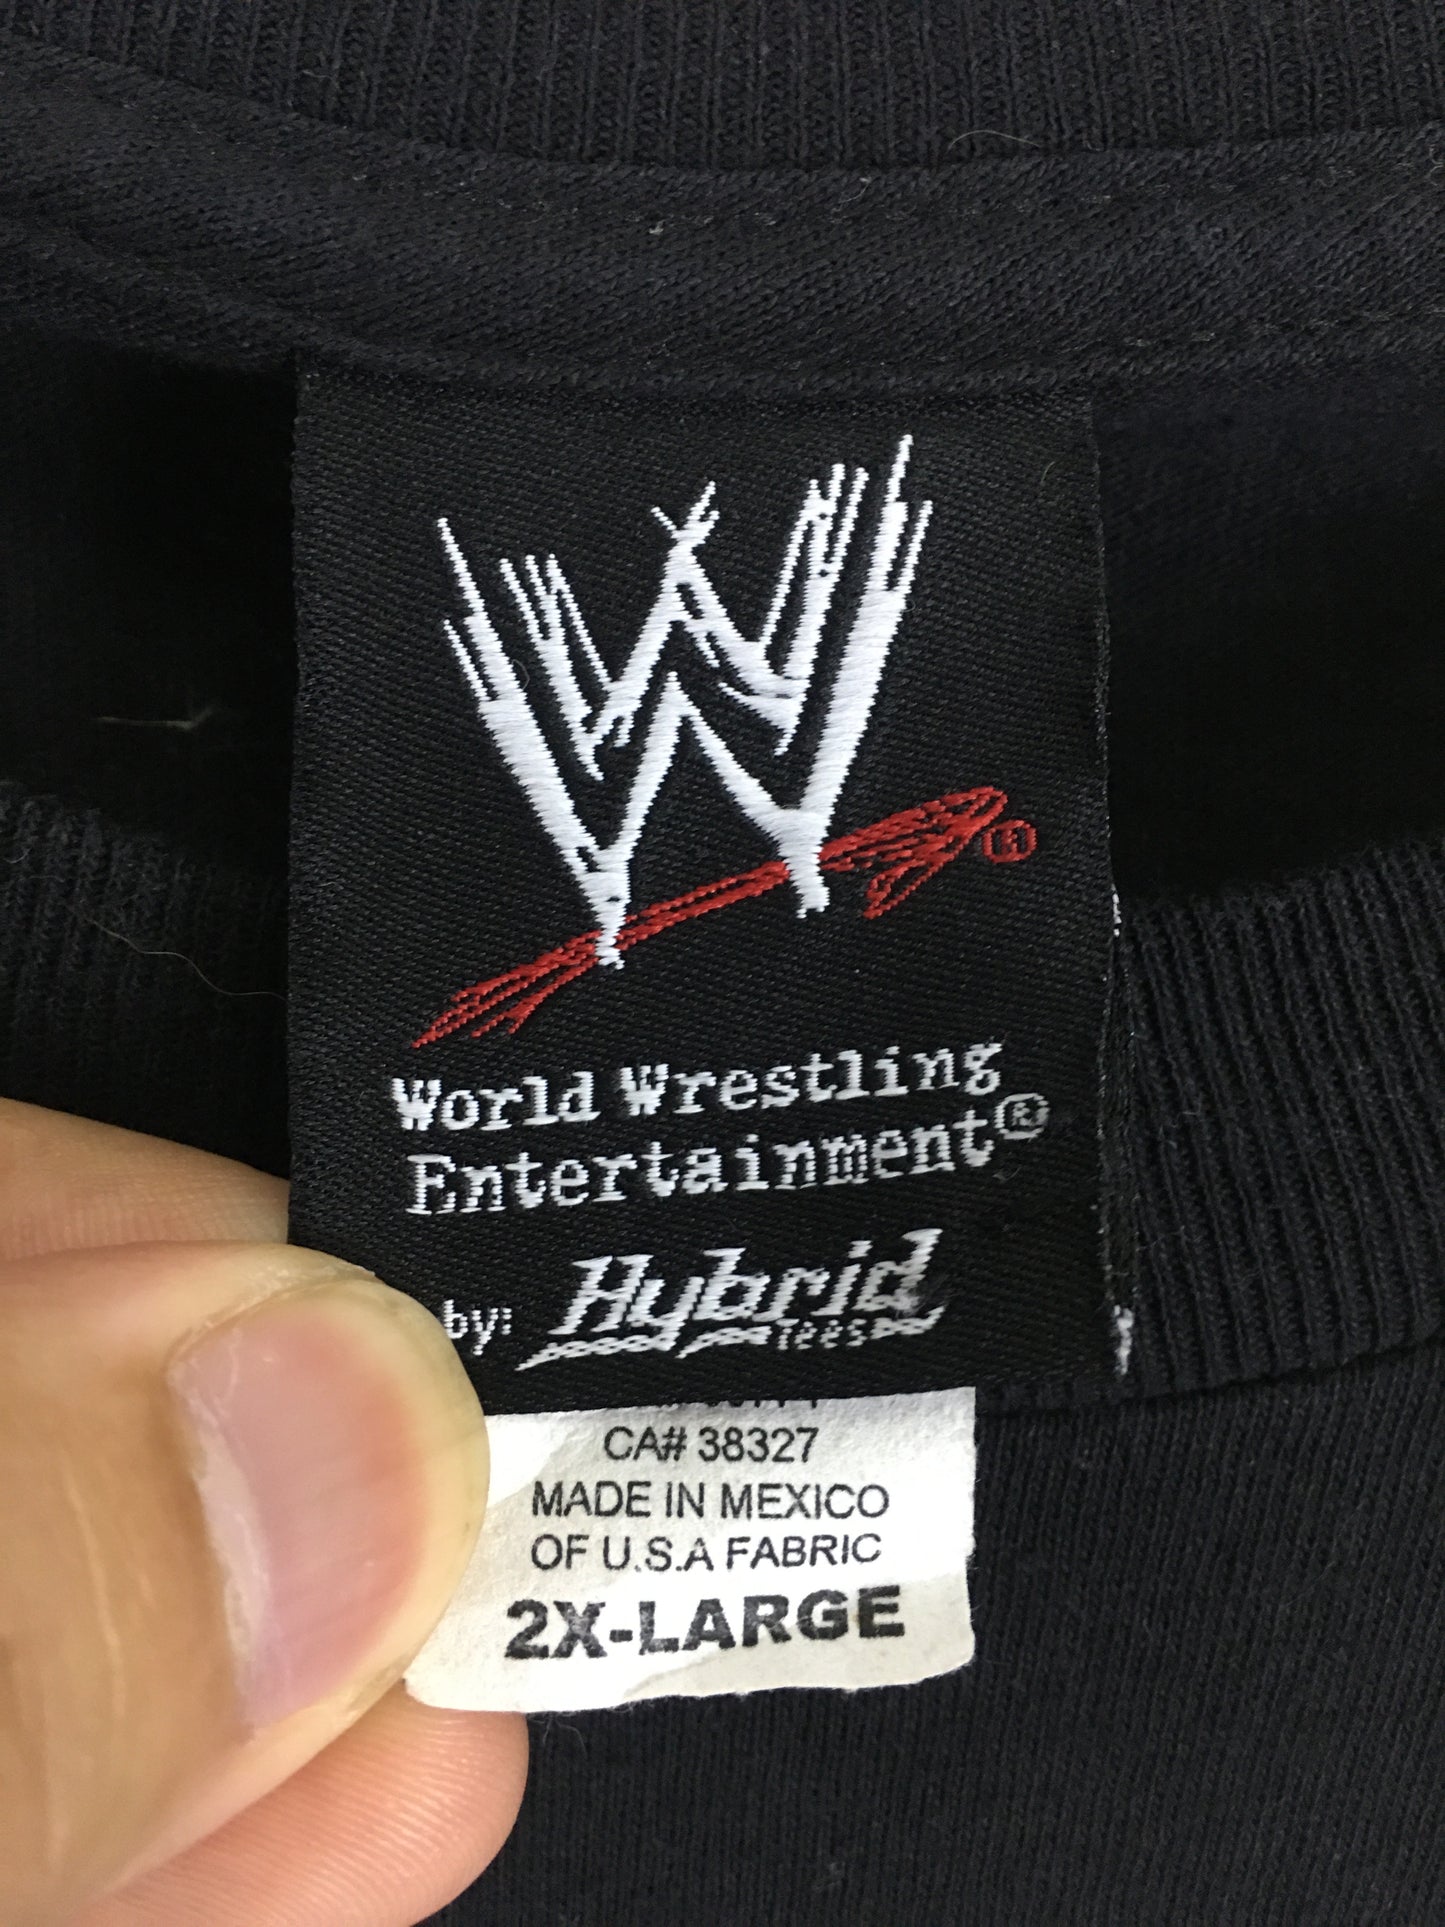 Vintage Undertaker WWE 00's T-shirt